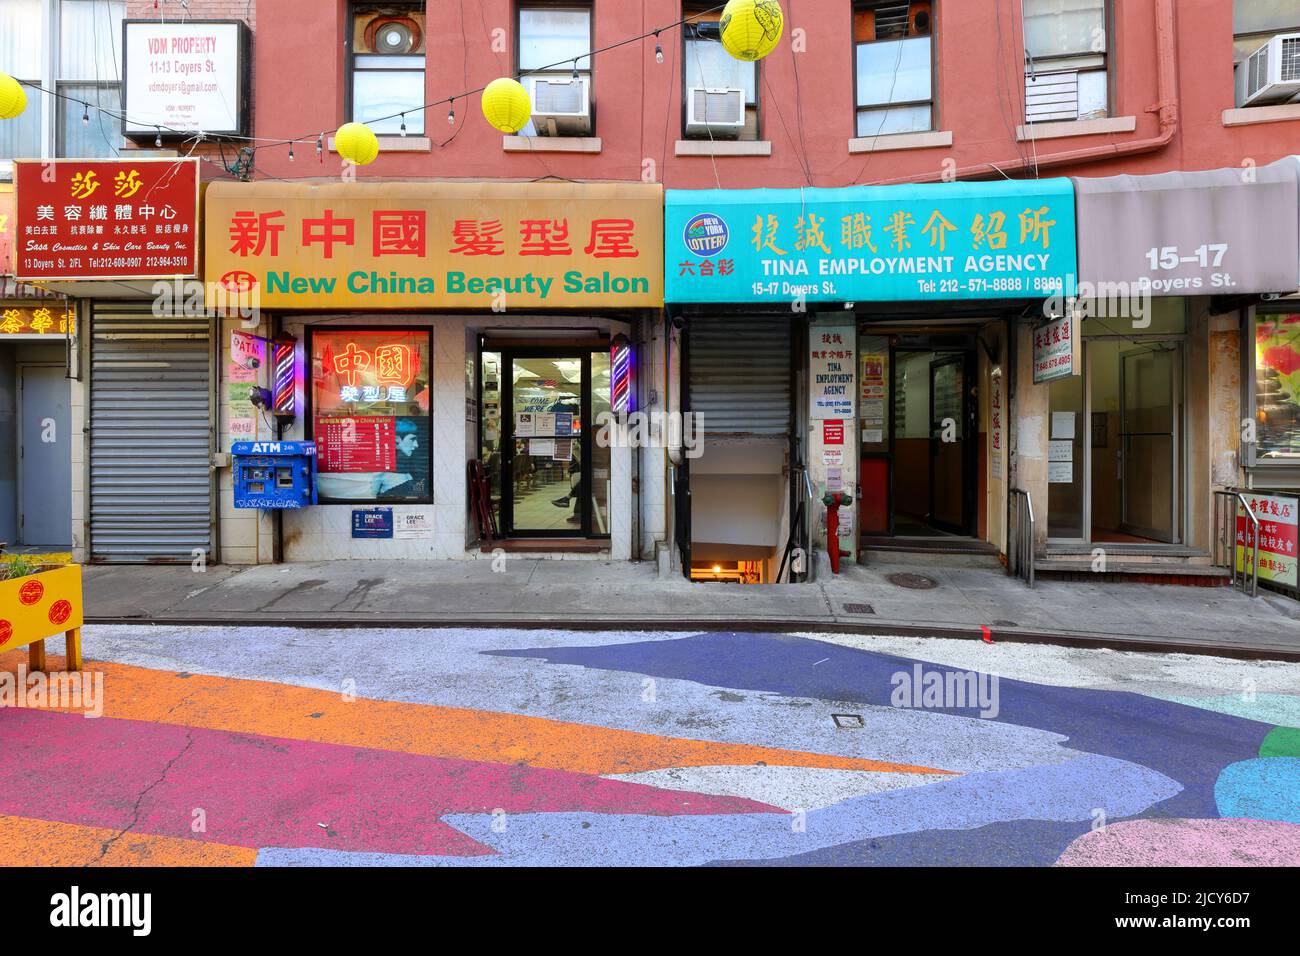 New China Beauty Salon, employment agency, 15-17 Doyers St, New York, NYC storefront photo in Manhattan Chinatown. Stock Photo